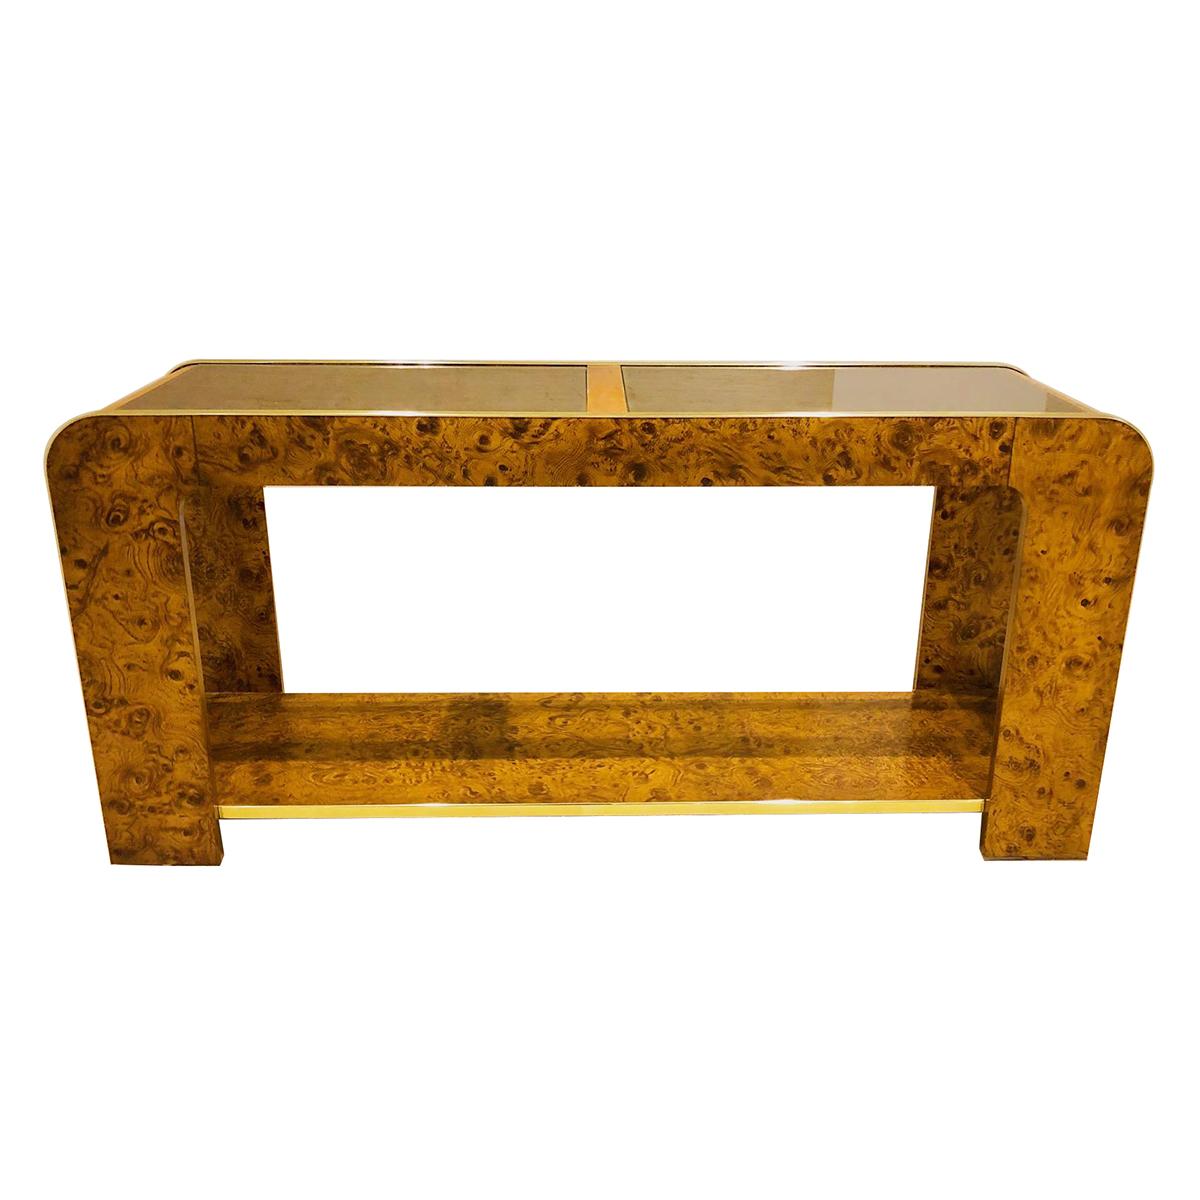 A circa 1960s Italian wood veneered and smoke glass sofa console table.

Measurements:
Long 55